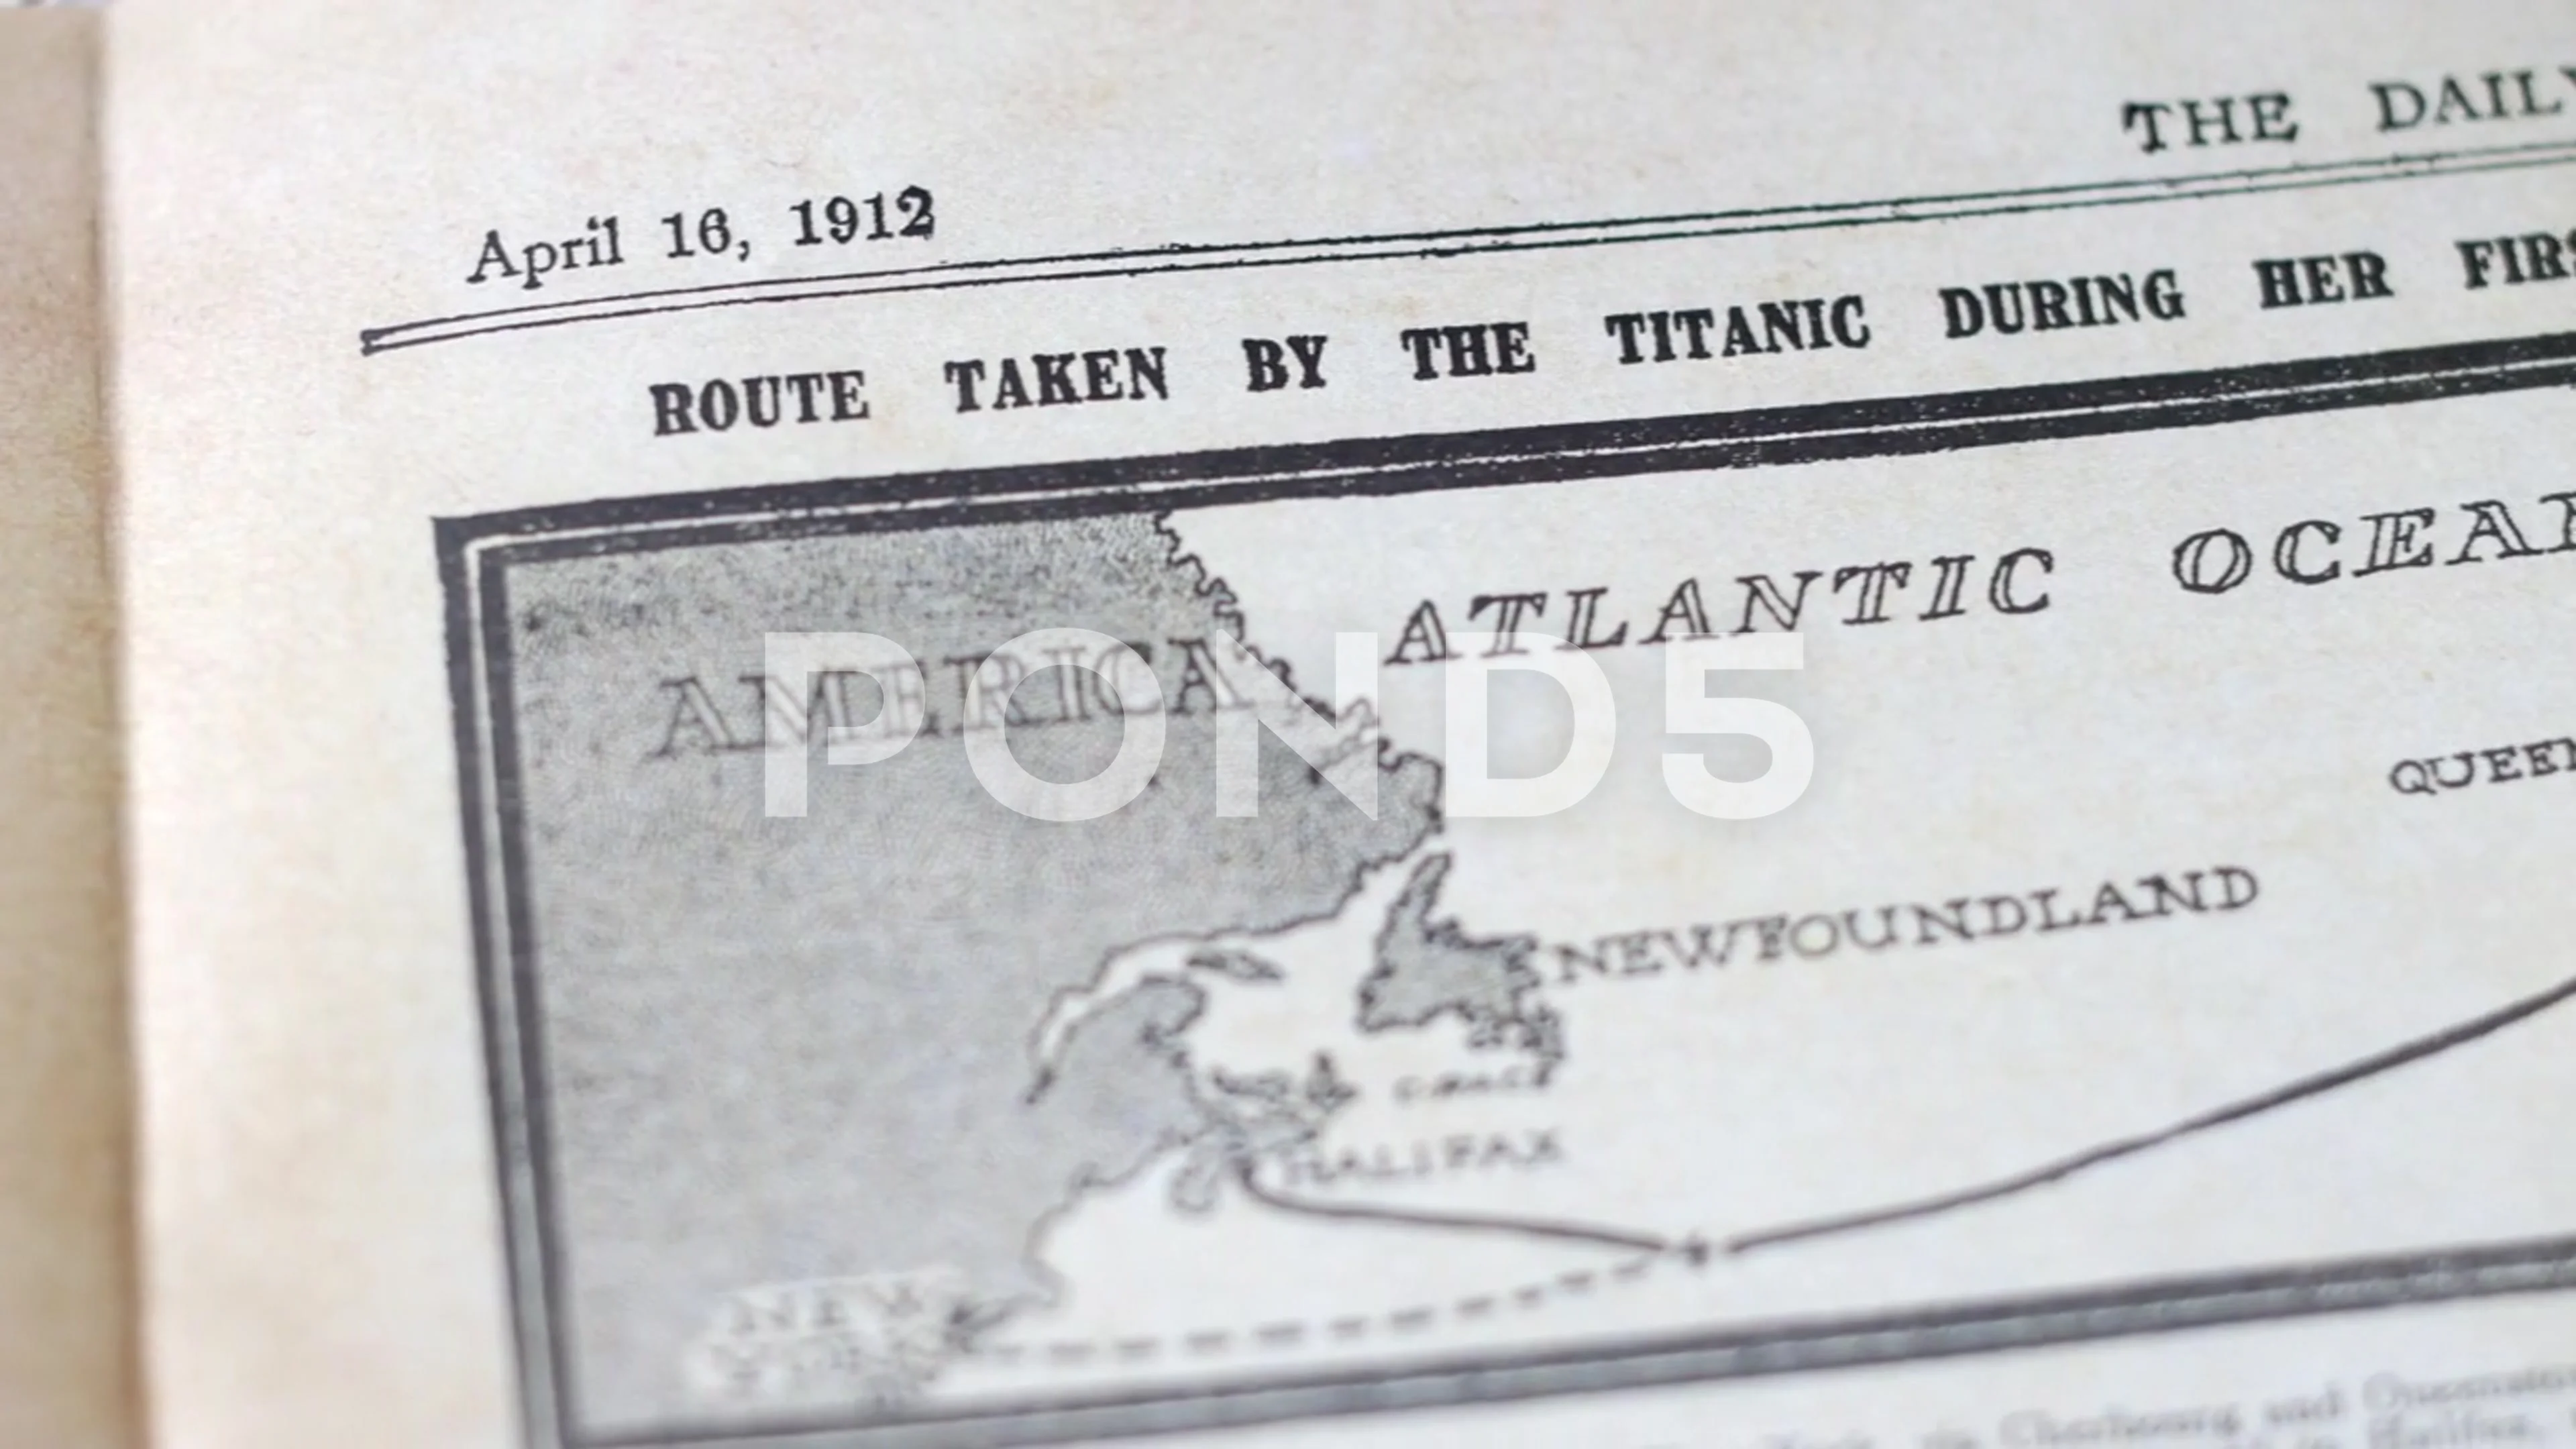 titanic route map 1912